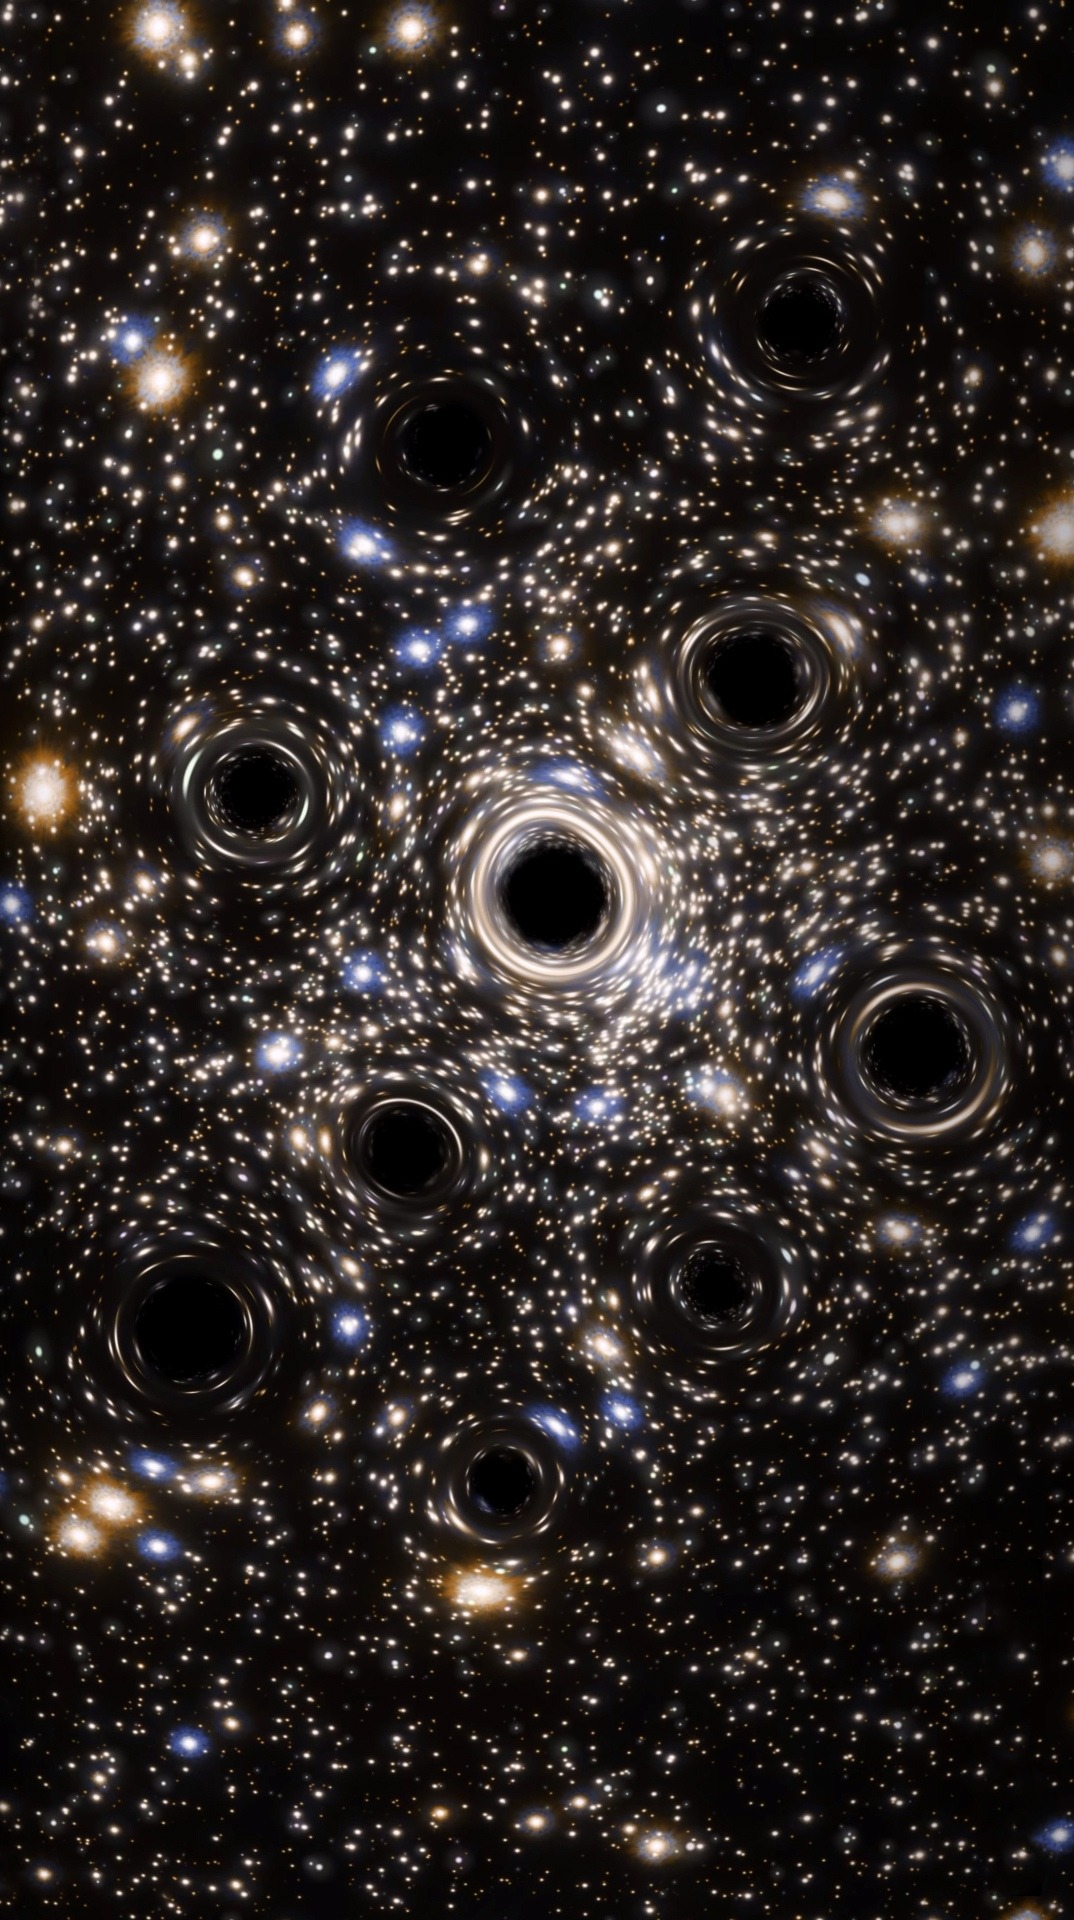 Foto: ESA, Hubble, N. Bartmann